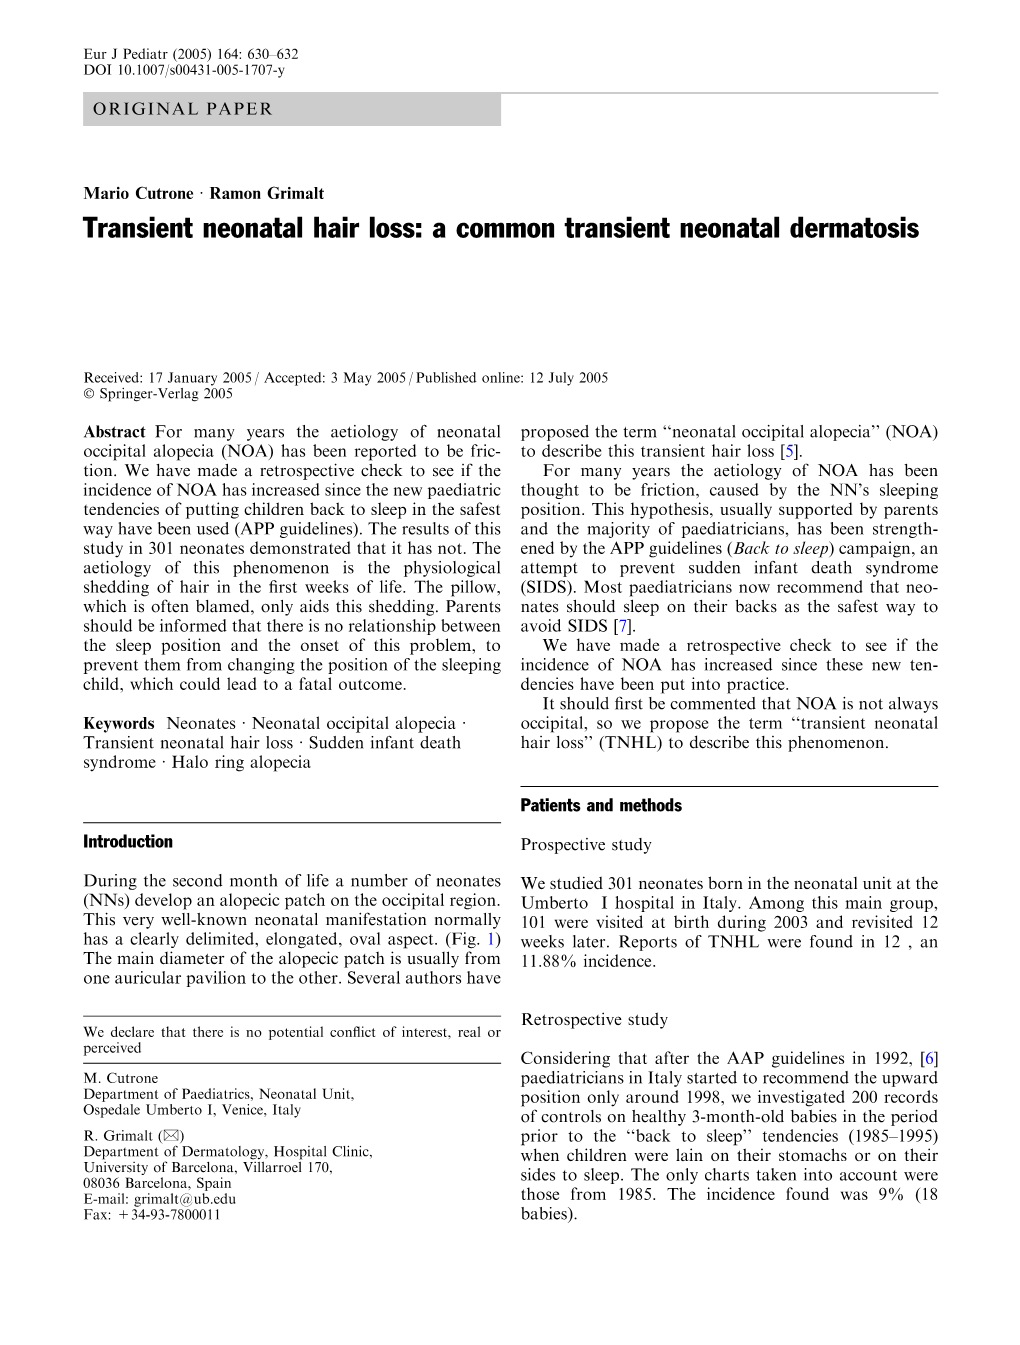 Transient Neonatal Hair Loss: a Common Transient Neonatal Dermatosis